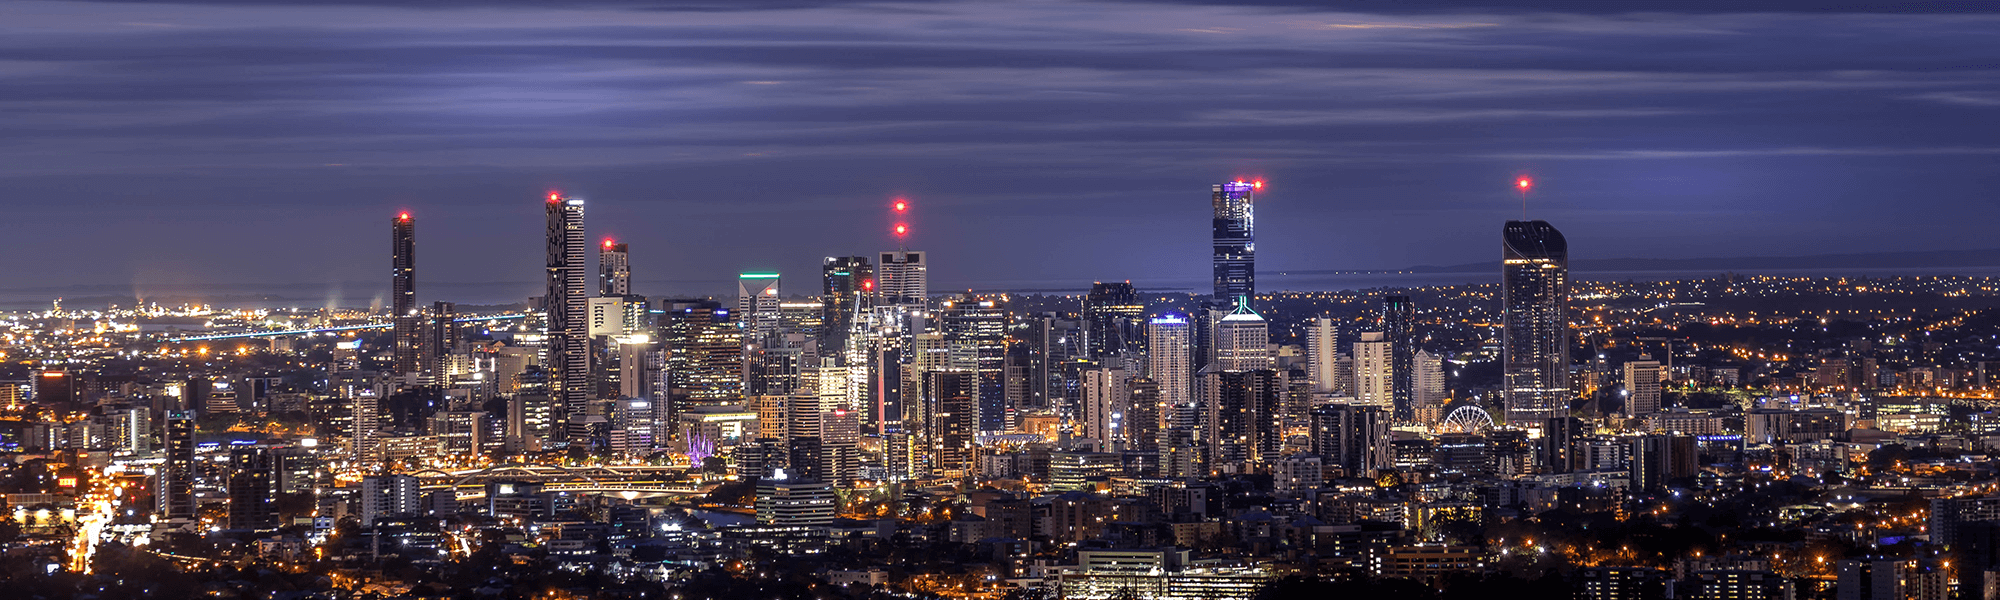 Landscape of Brisbane City by Night